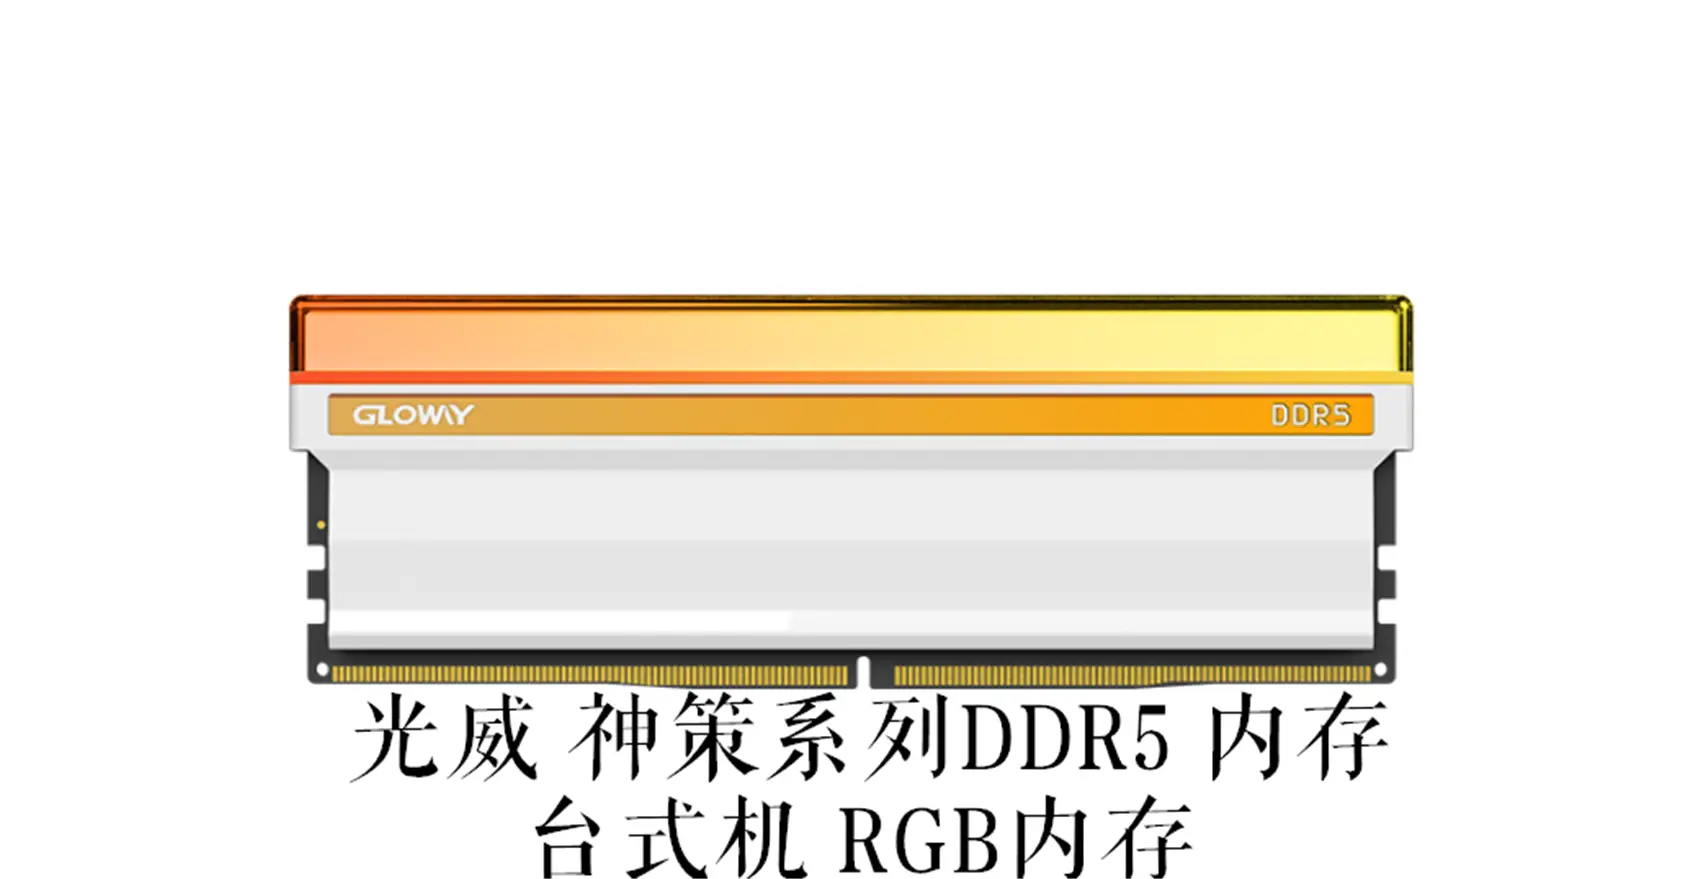 ddr5支持ddr3吗 DDR5技术解读：兼具DDR3功能的新一代内存技术探索与比较  第6张